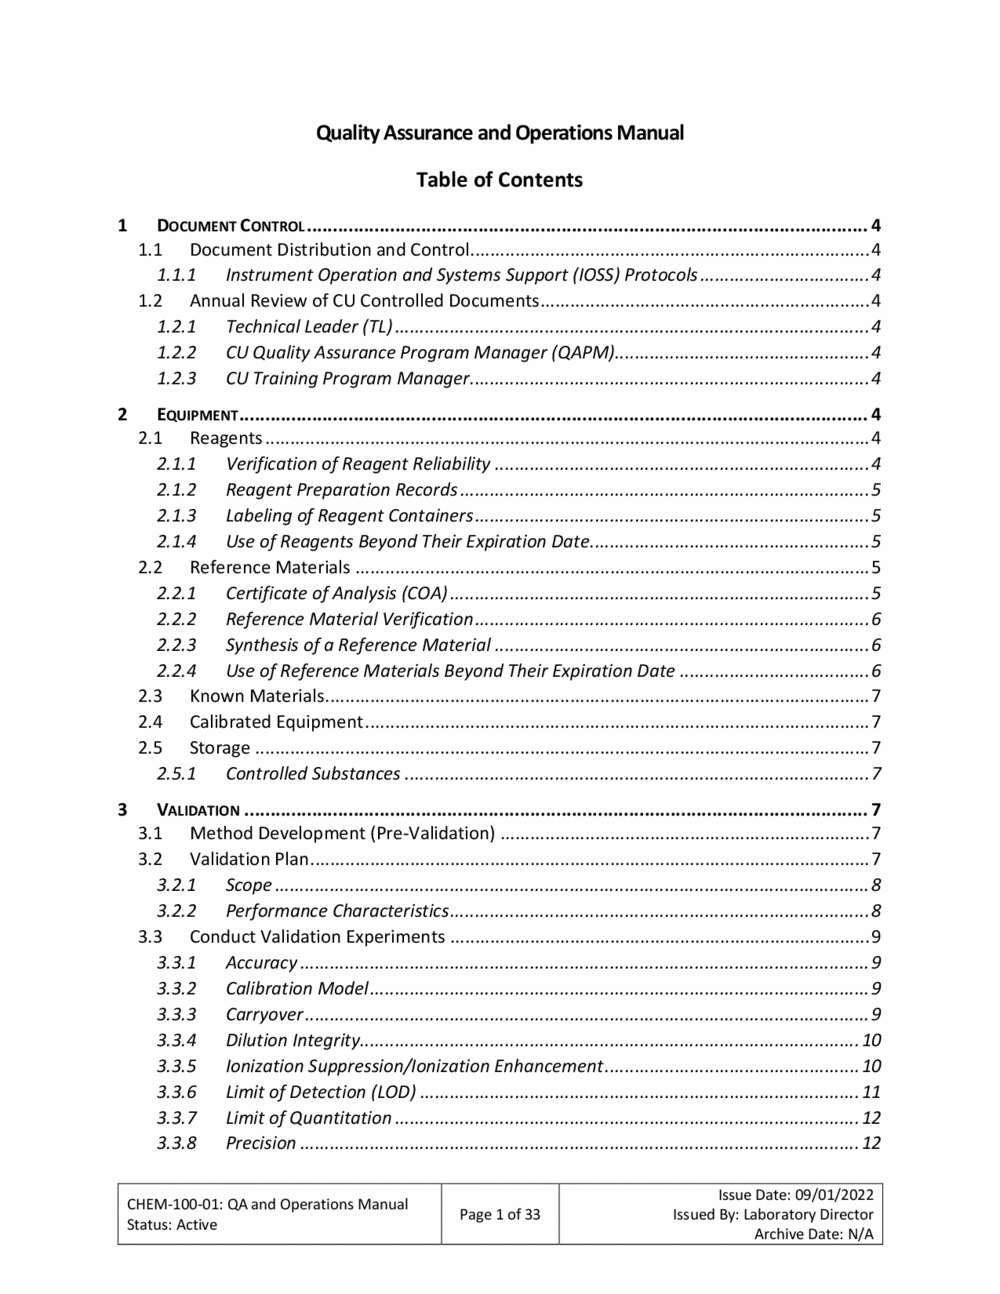 CHEM-100-01 Quality Assurance and Operations Manual.pdf — FBI Lab Vault